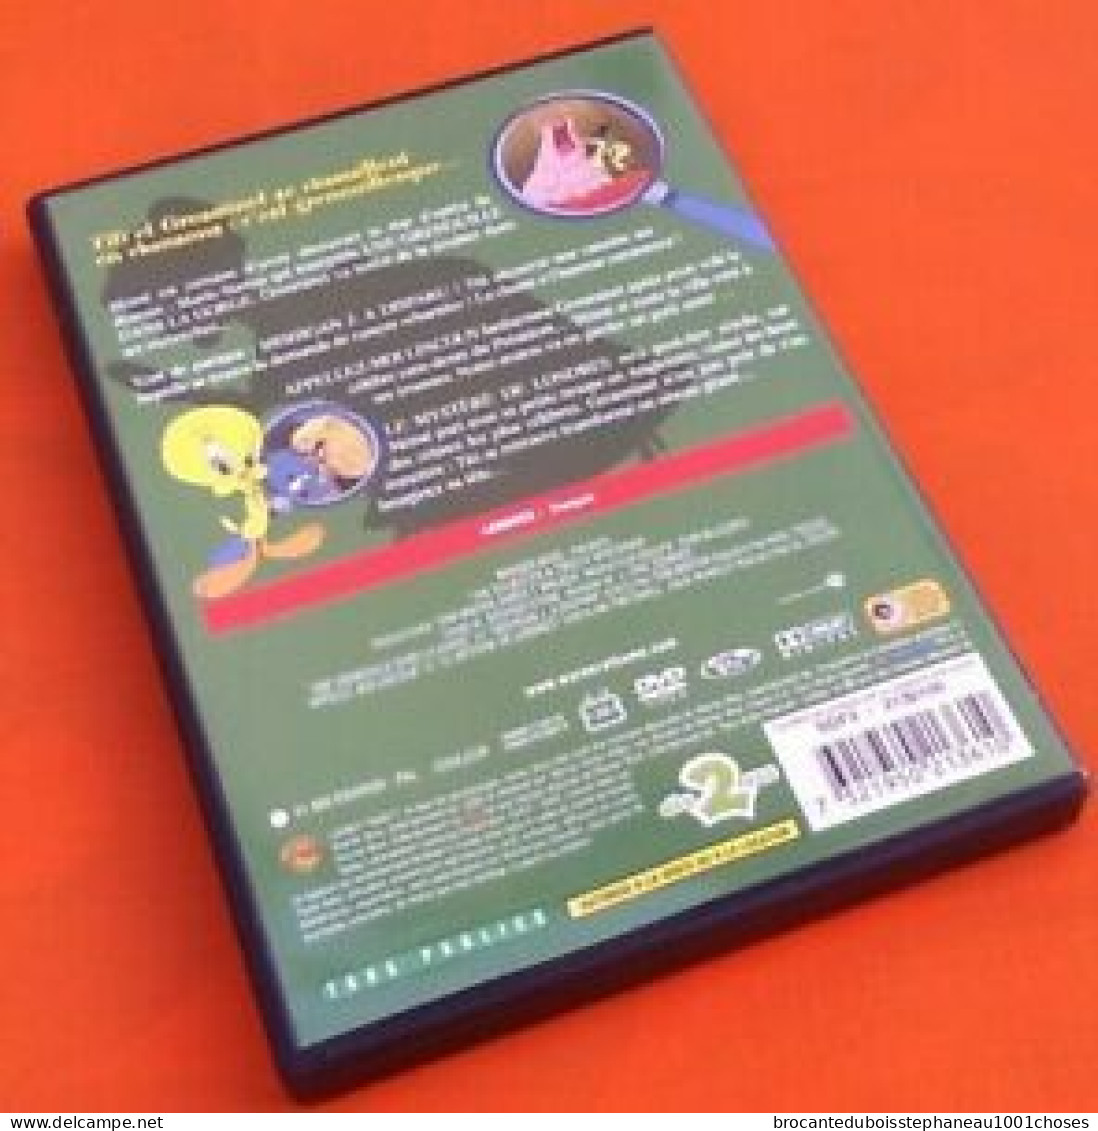 DVD  Titi &Grosminet   Une Grenouille Dans La Gorge  (2008)  Warner Kids - Dessin Animé